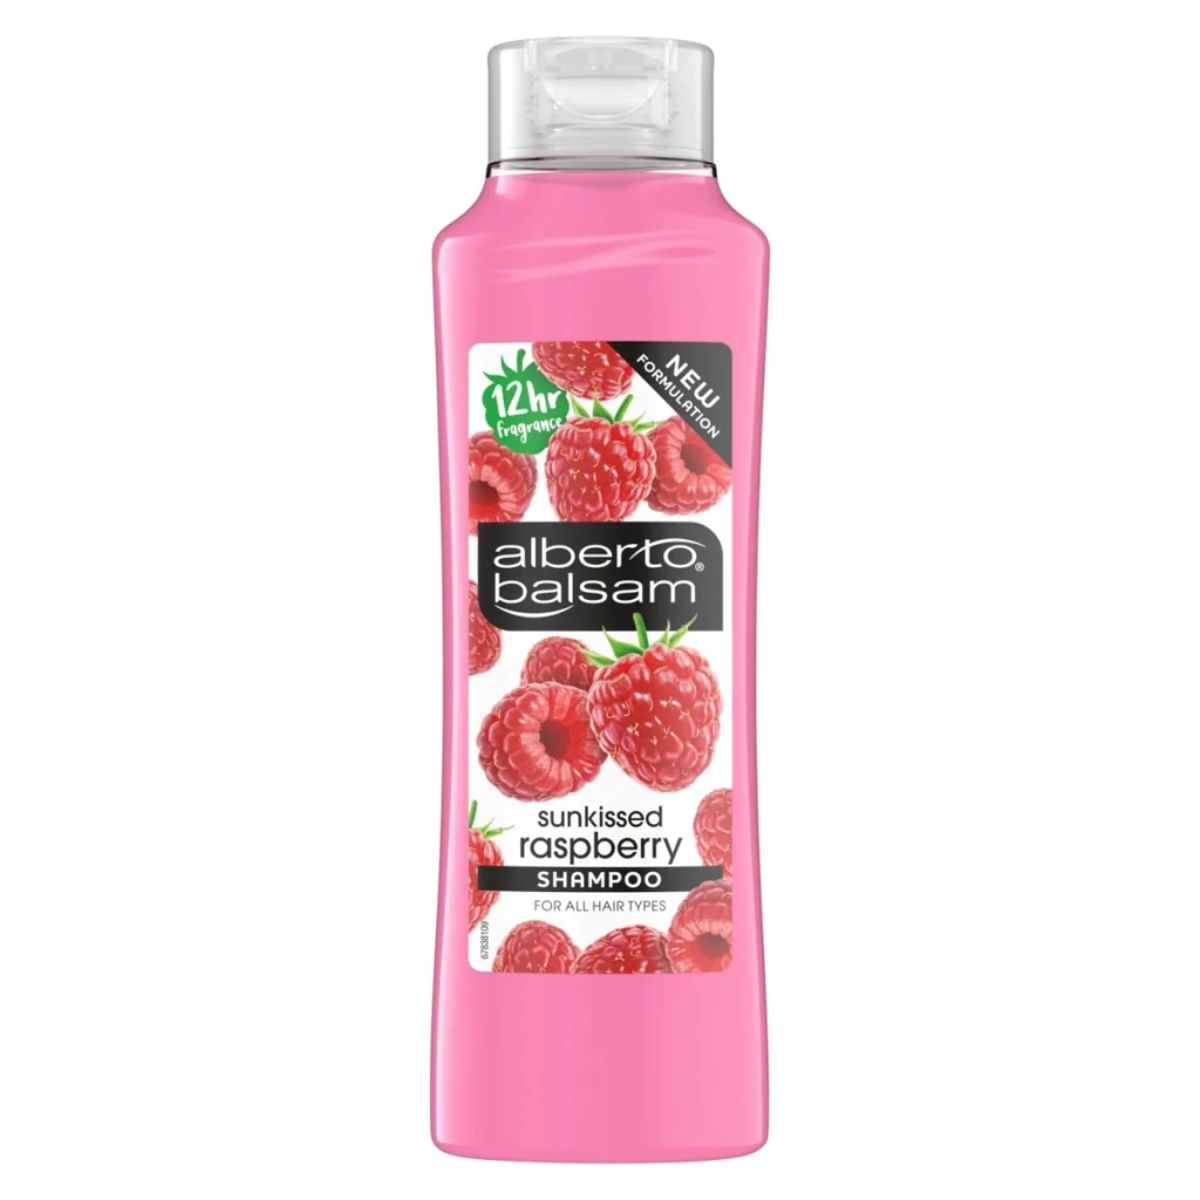 A bottle of Alberto Balsam - Raspberry Shampoo - 350ml with raspberries on it.